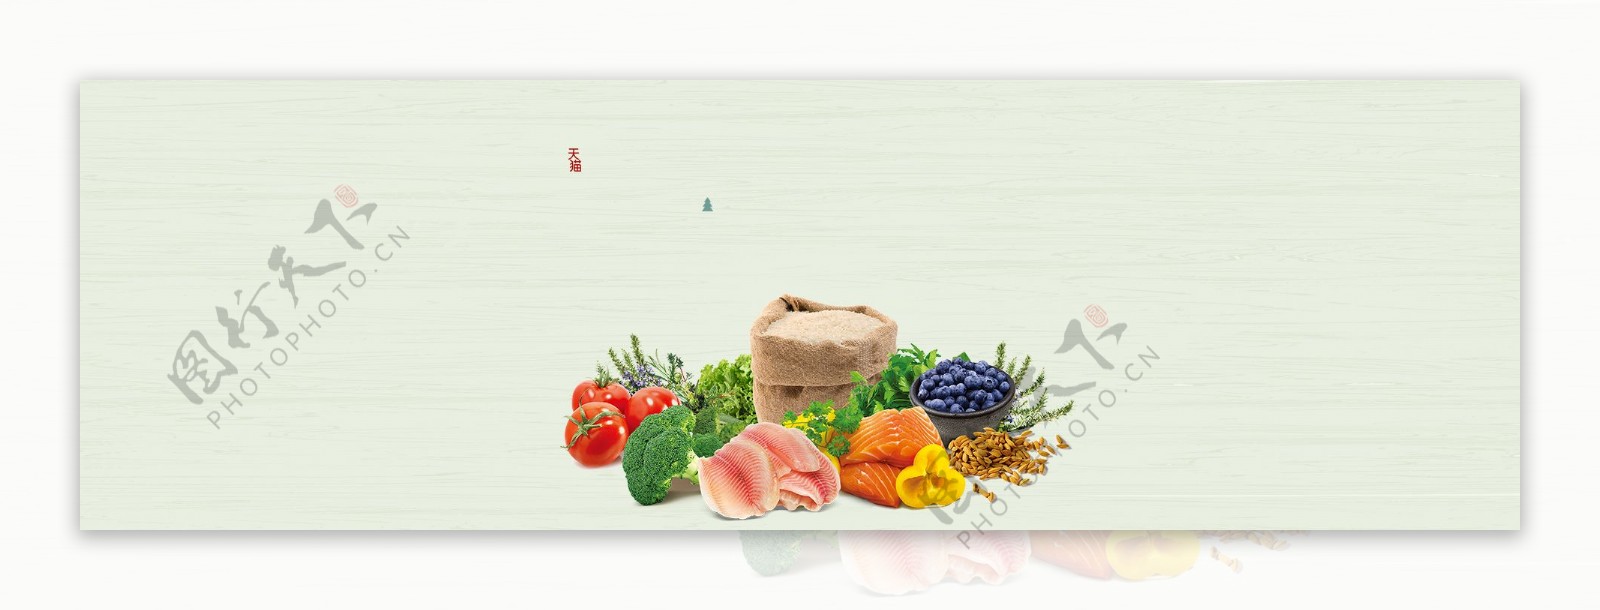 水果蔬菜拼盘banner创意设计